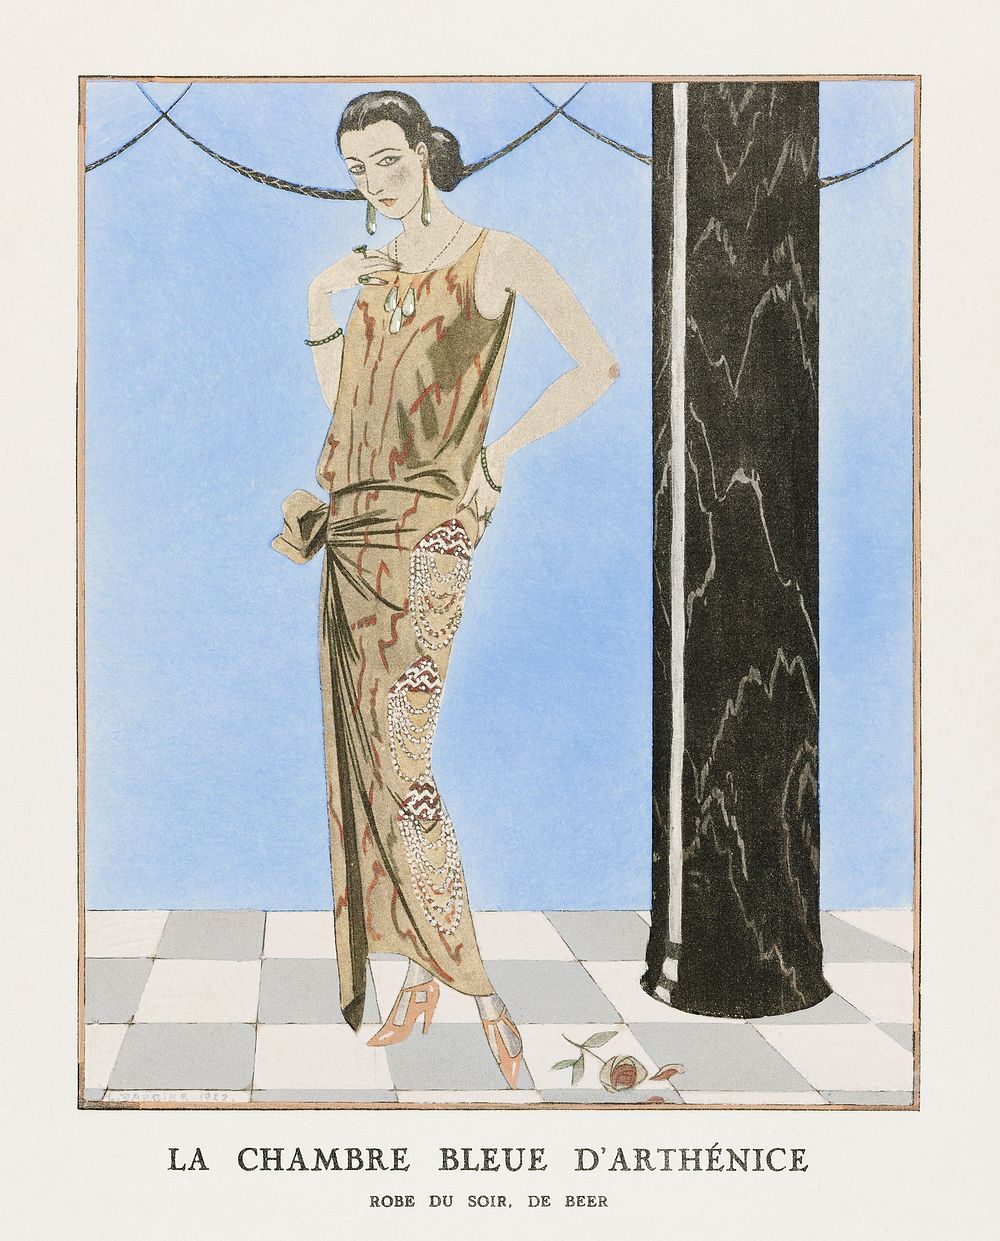 La chambre bleue d'arth&eacute;nice: Robe du soir, de Beer (1923) fashion illustration in high resolution by George Barbier.…